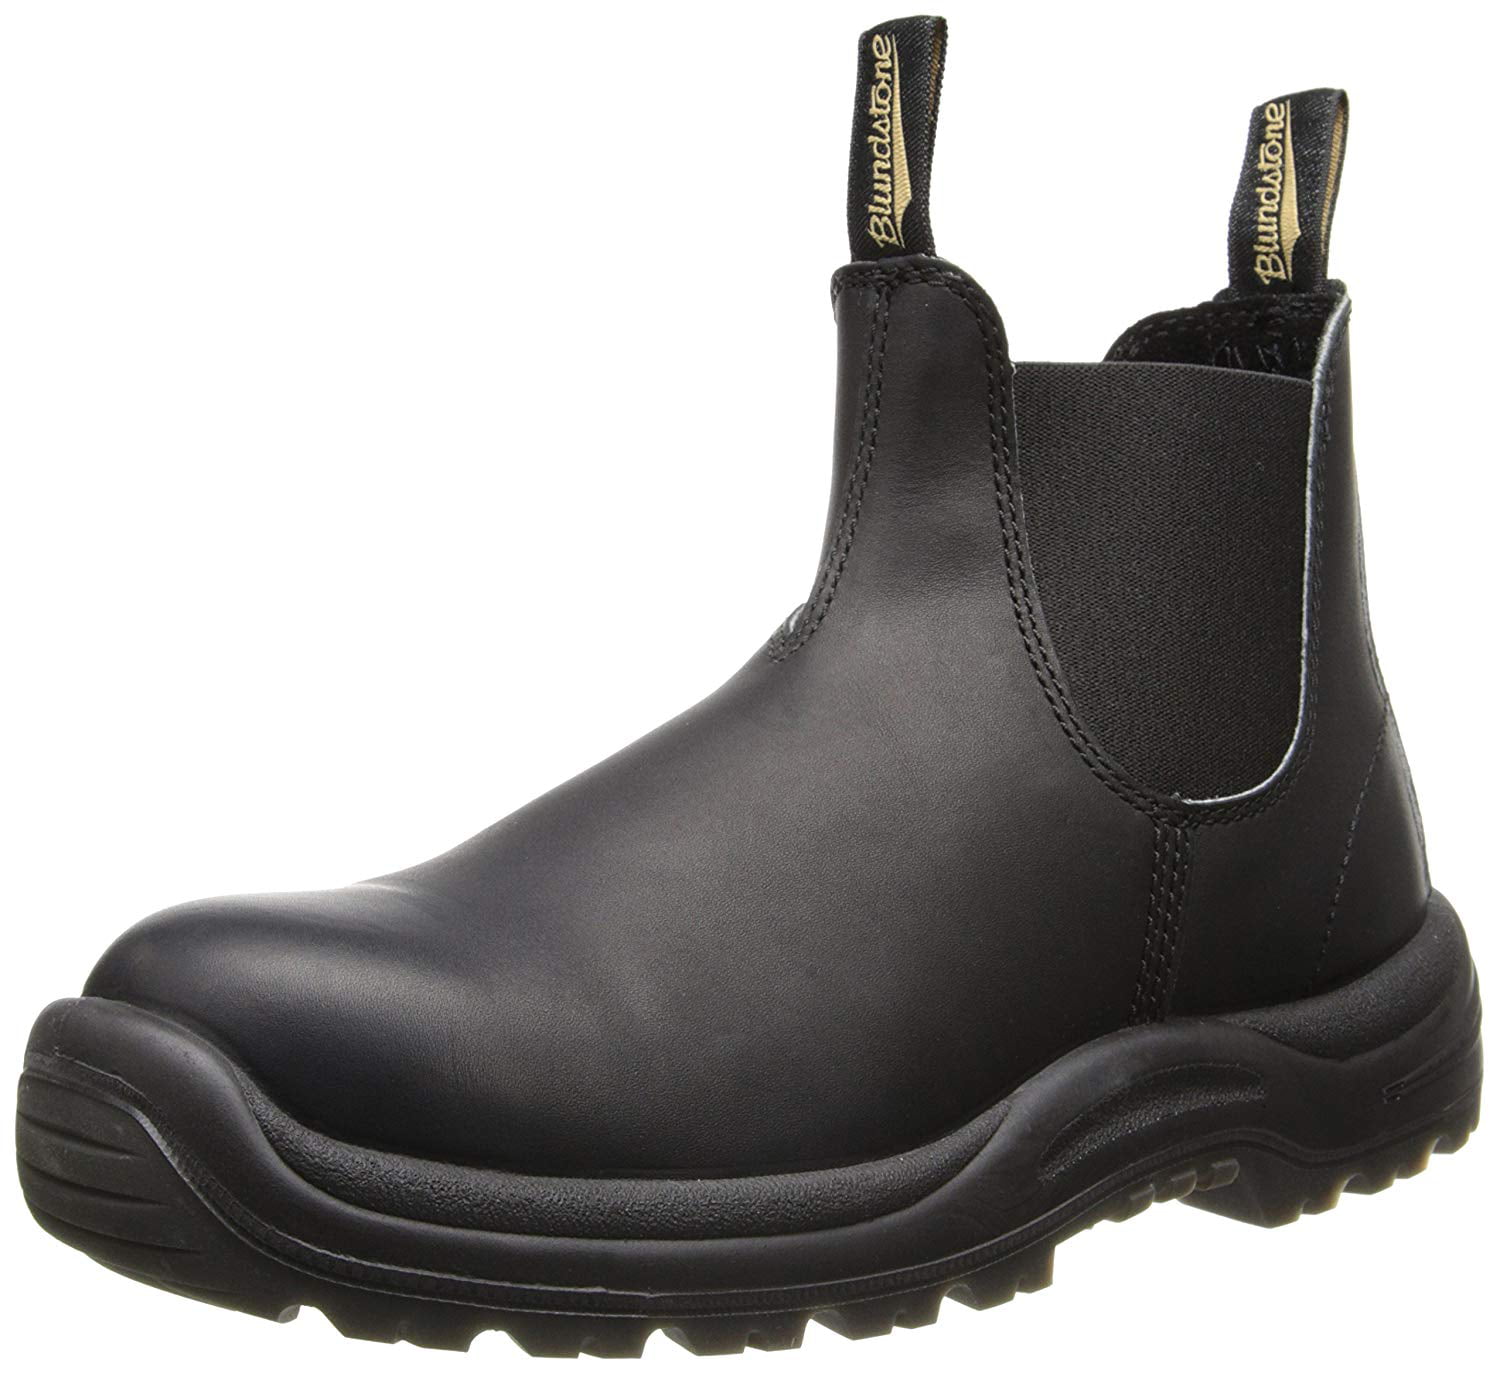 Blundstone - Blundstone Men's Work Series 179 Boots, Black, 6.5 D(M) US ...